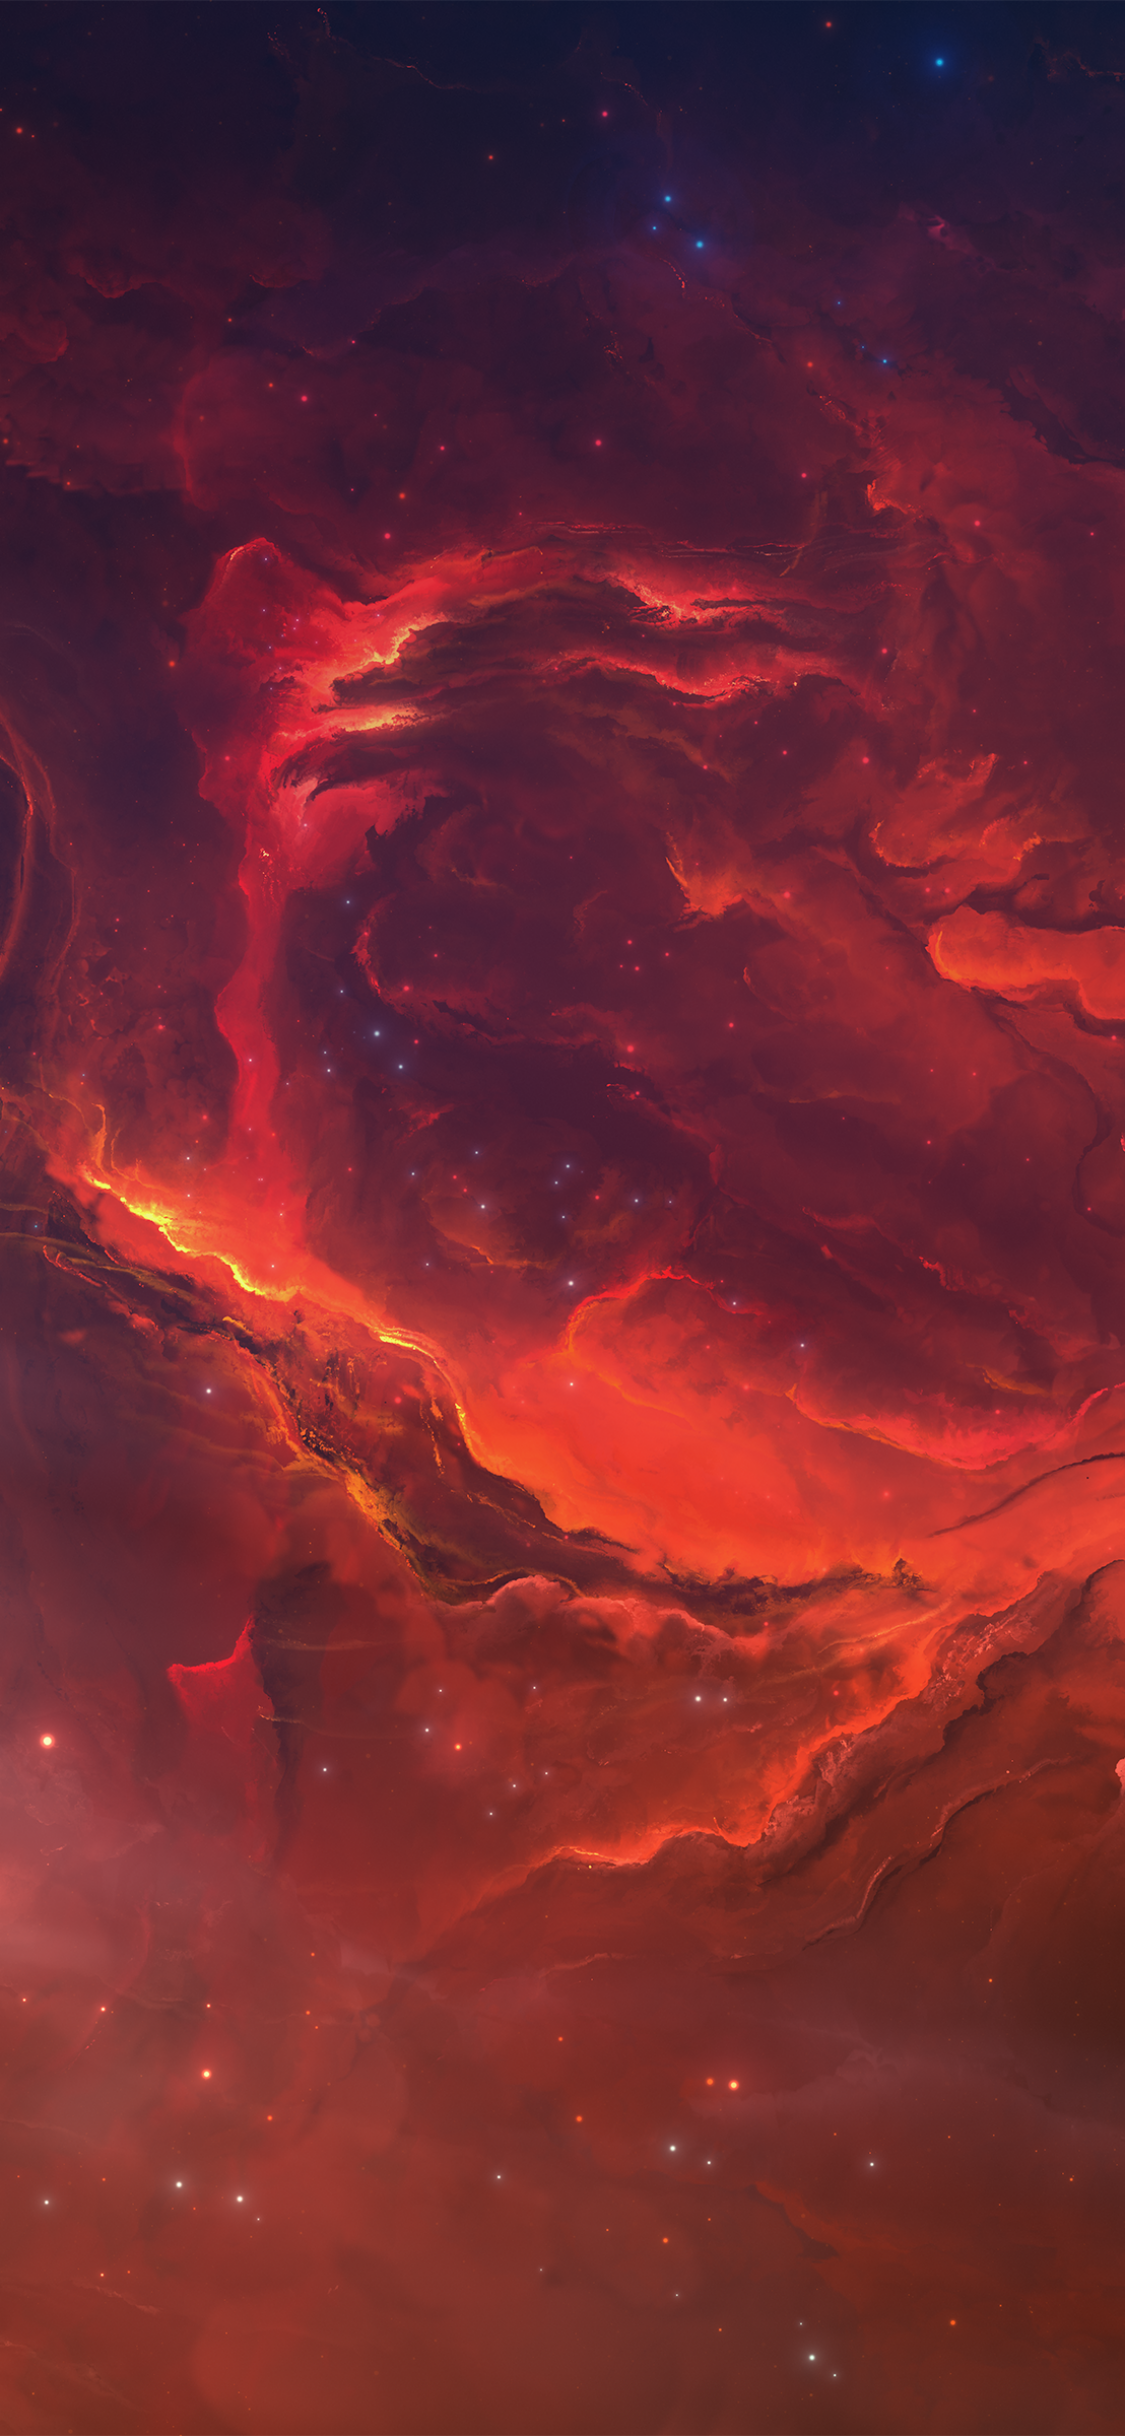 Cauldron Nebula